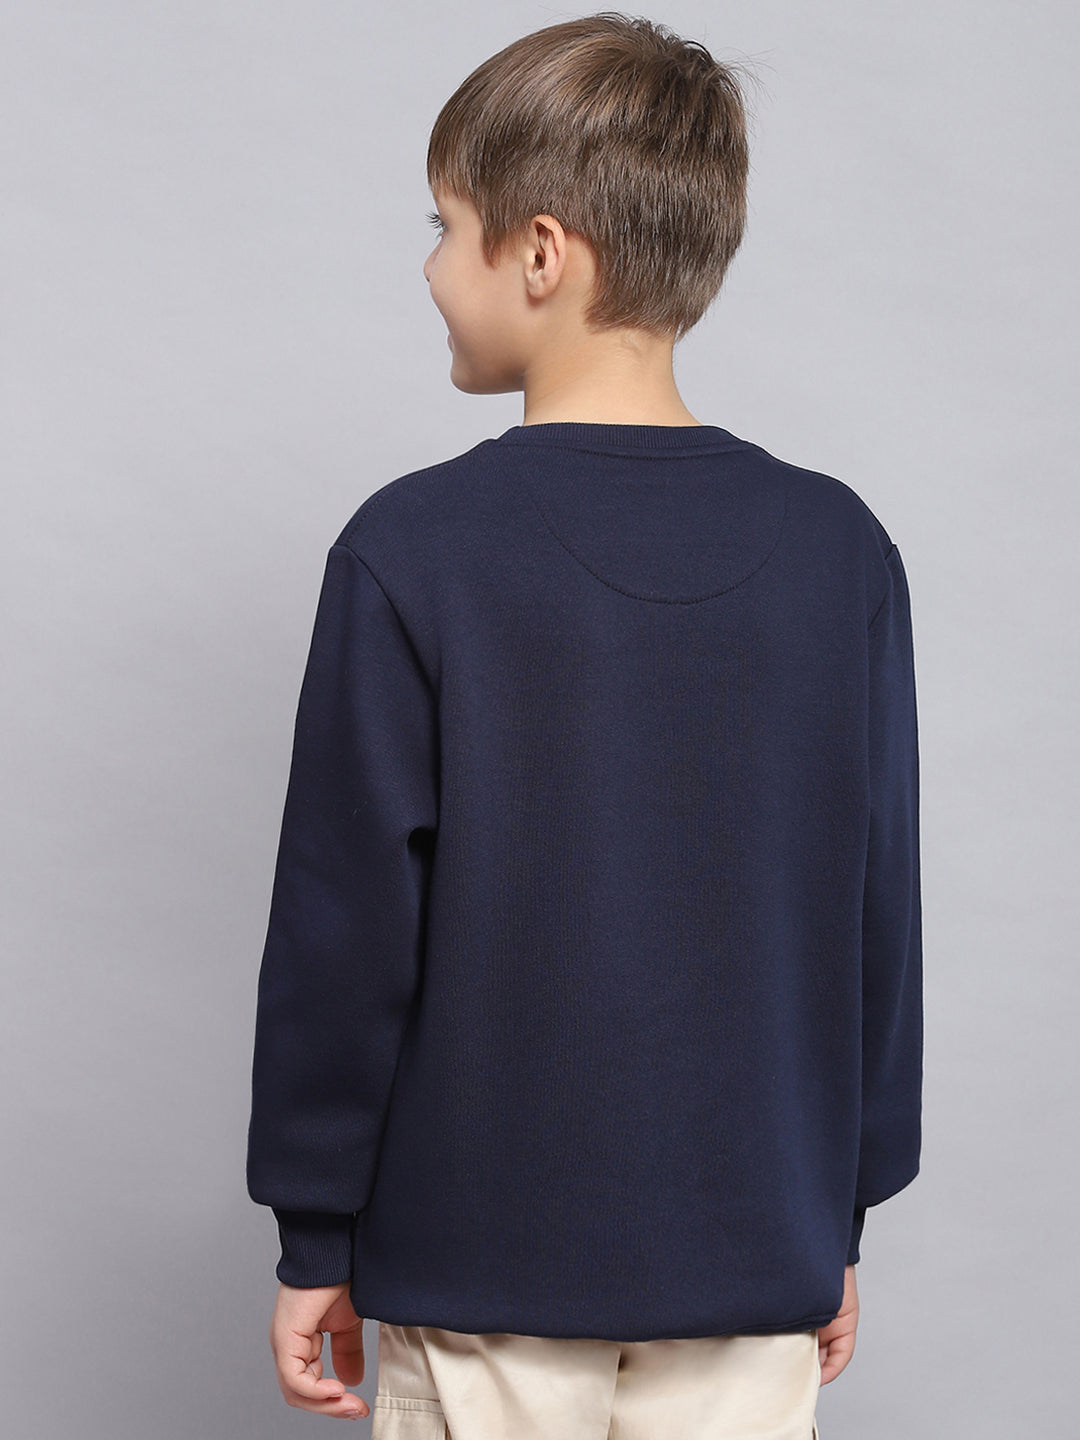 Boys Navy Blue Printed Round Neck Full Sleeve Sweatshirt